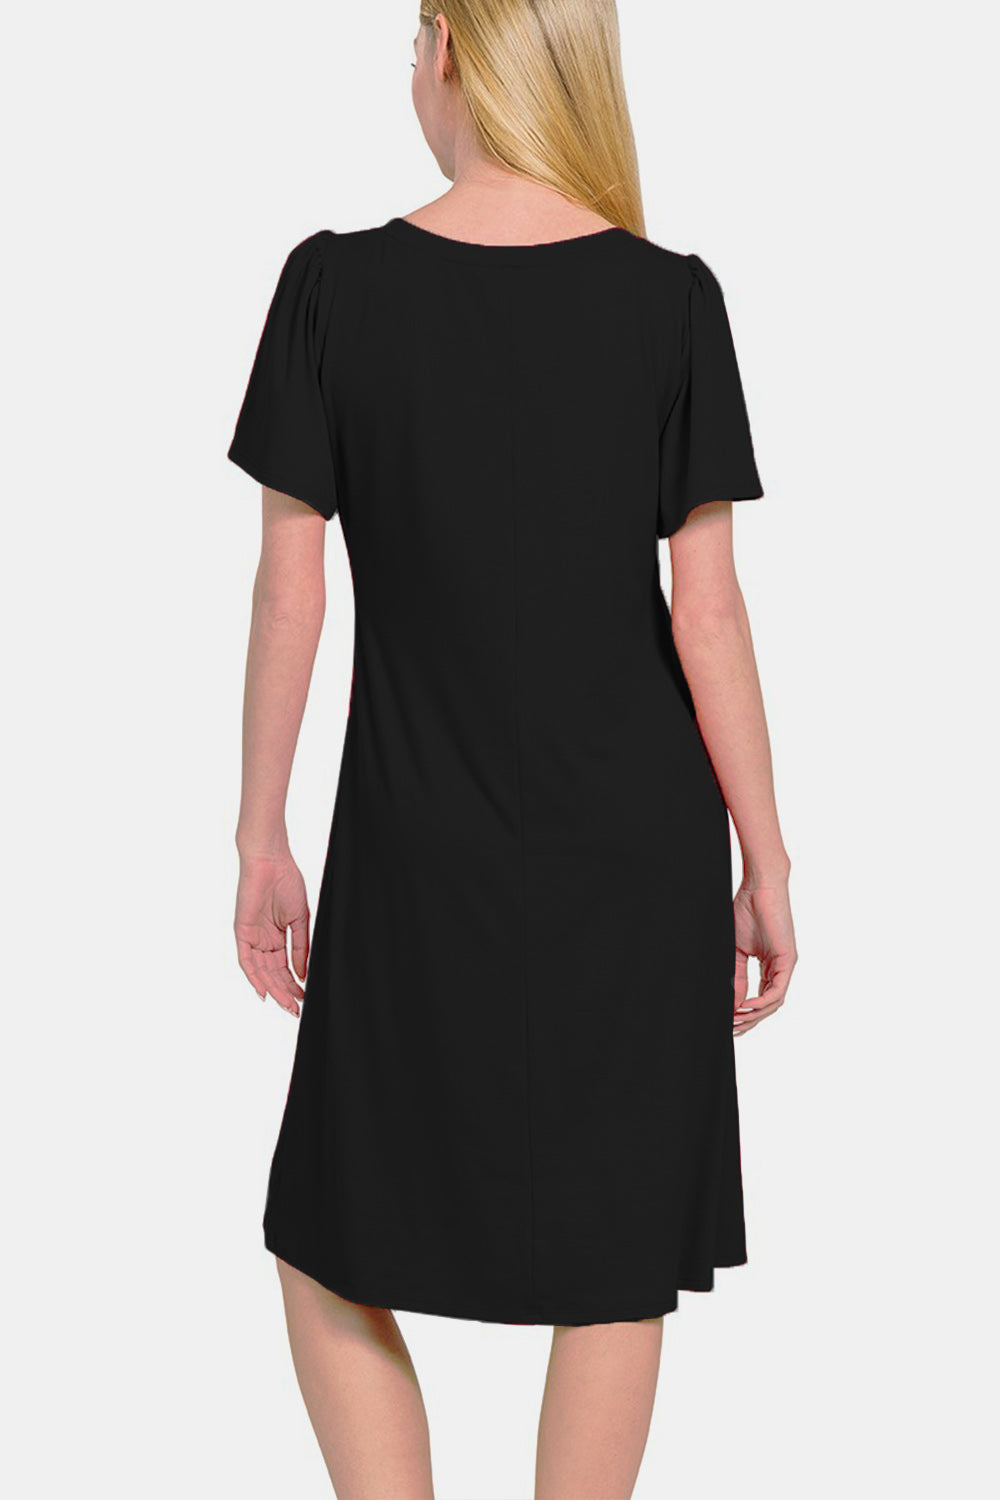 Zenana Black V-Neck Short Sleeve Dress Trendsi